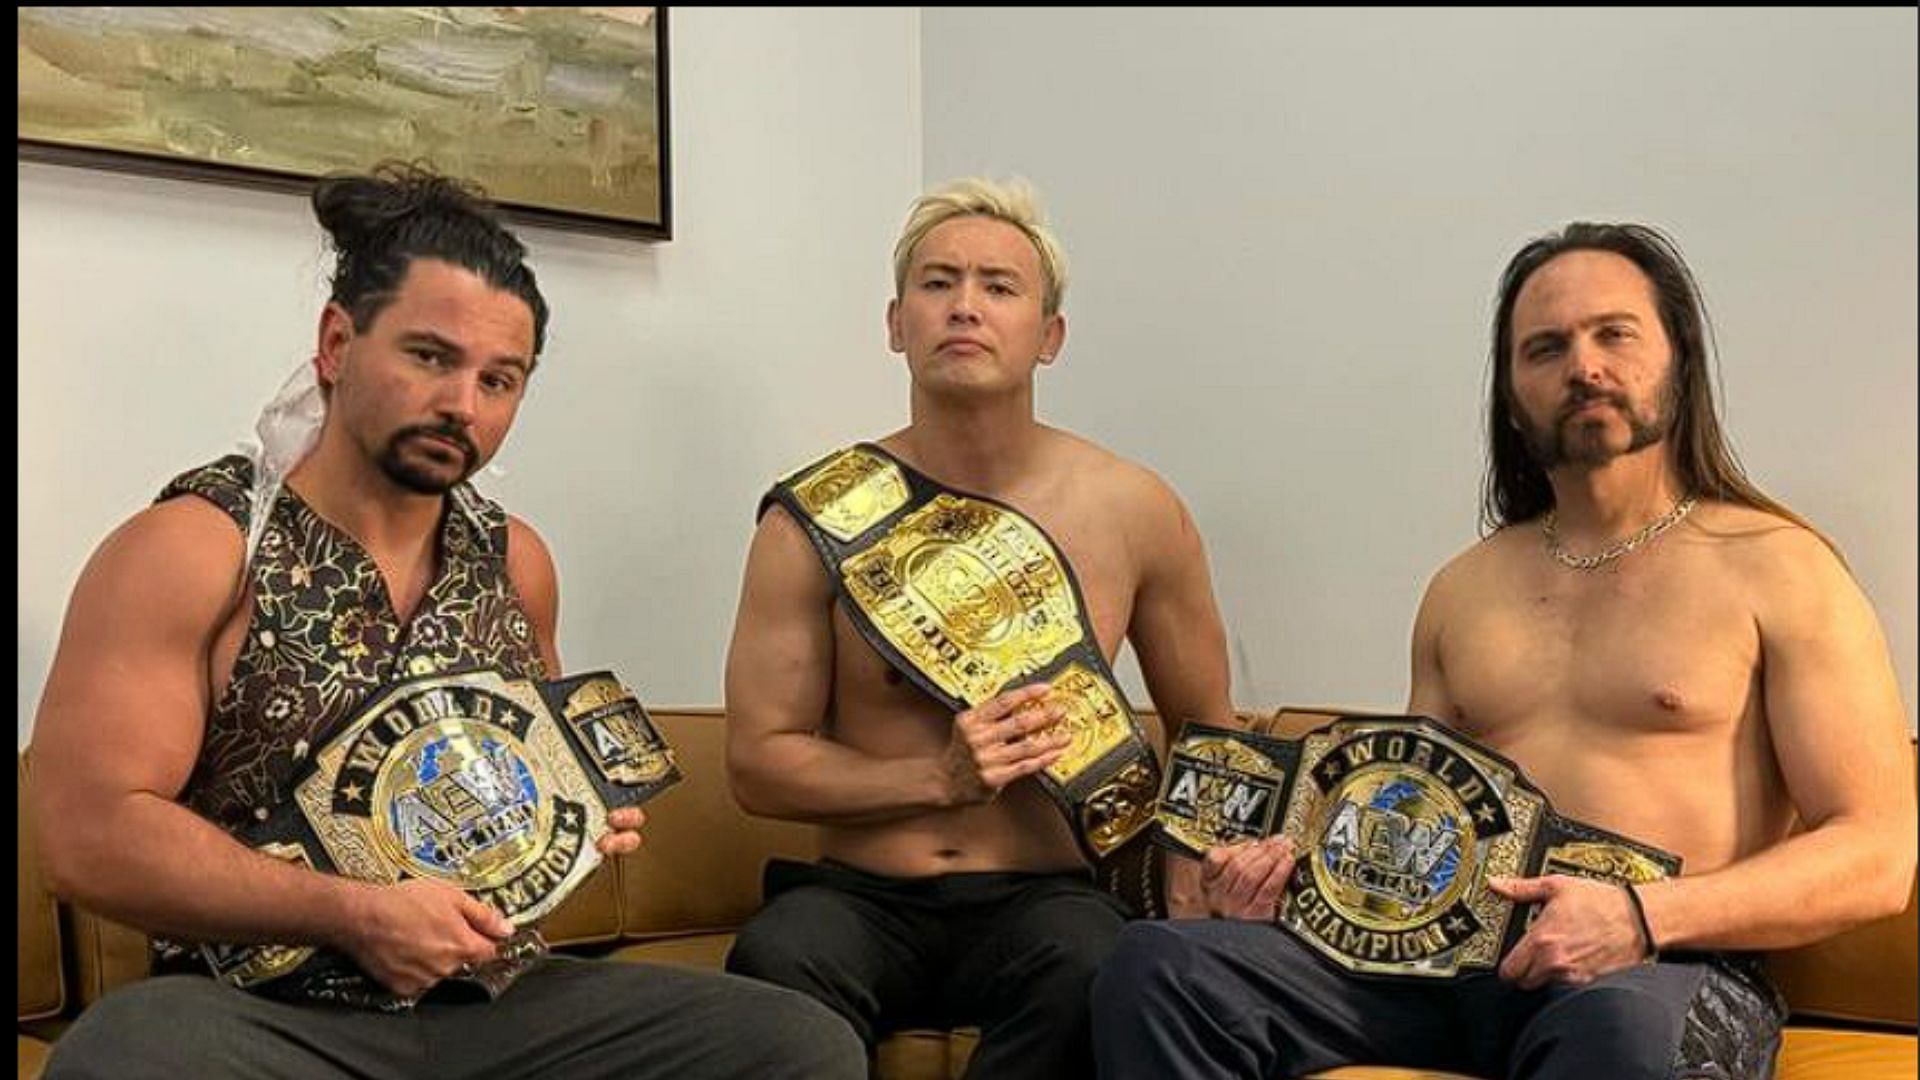 The Young Bucks and Kazuchika Okada form the new version of The Elite [Photo courtesy of Kazuchika Okada